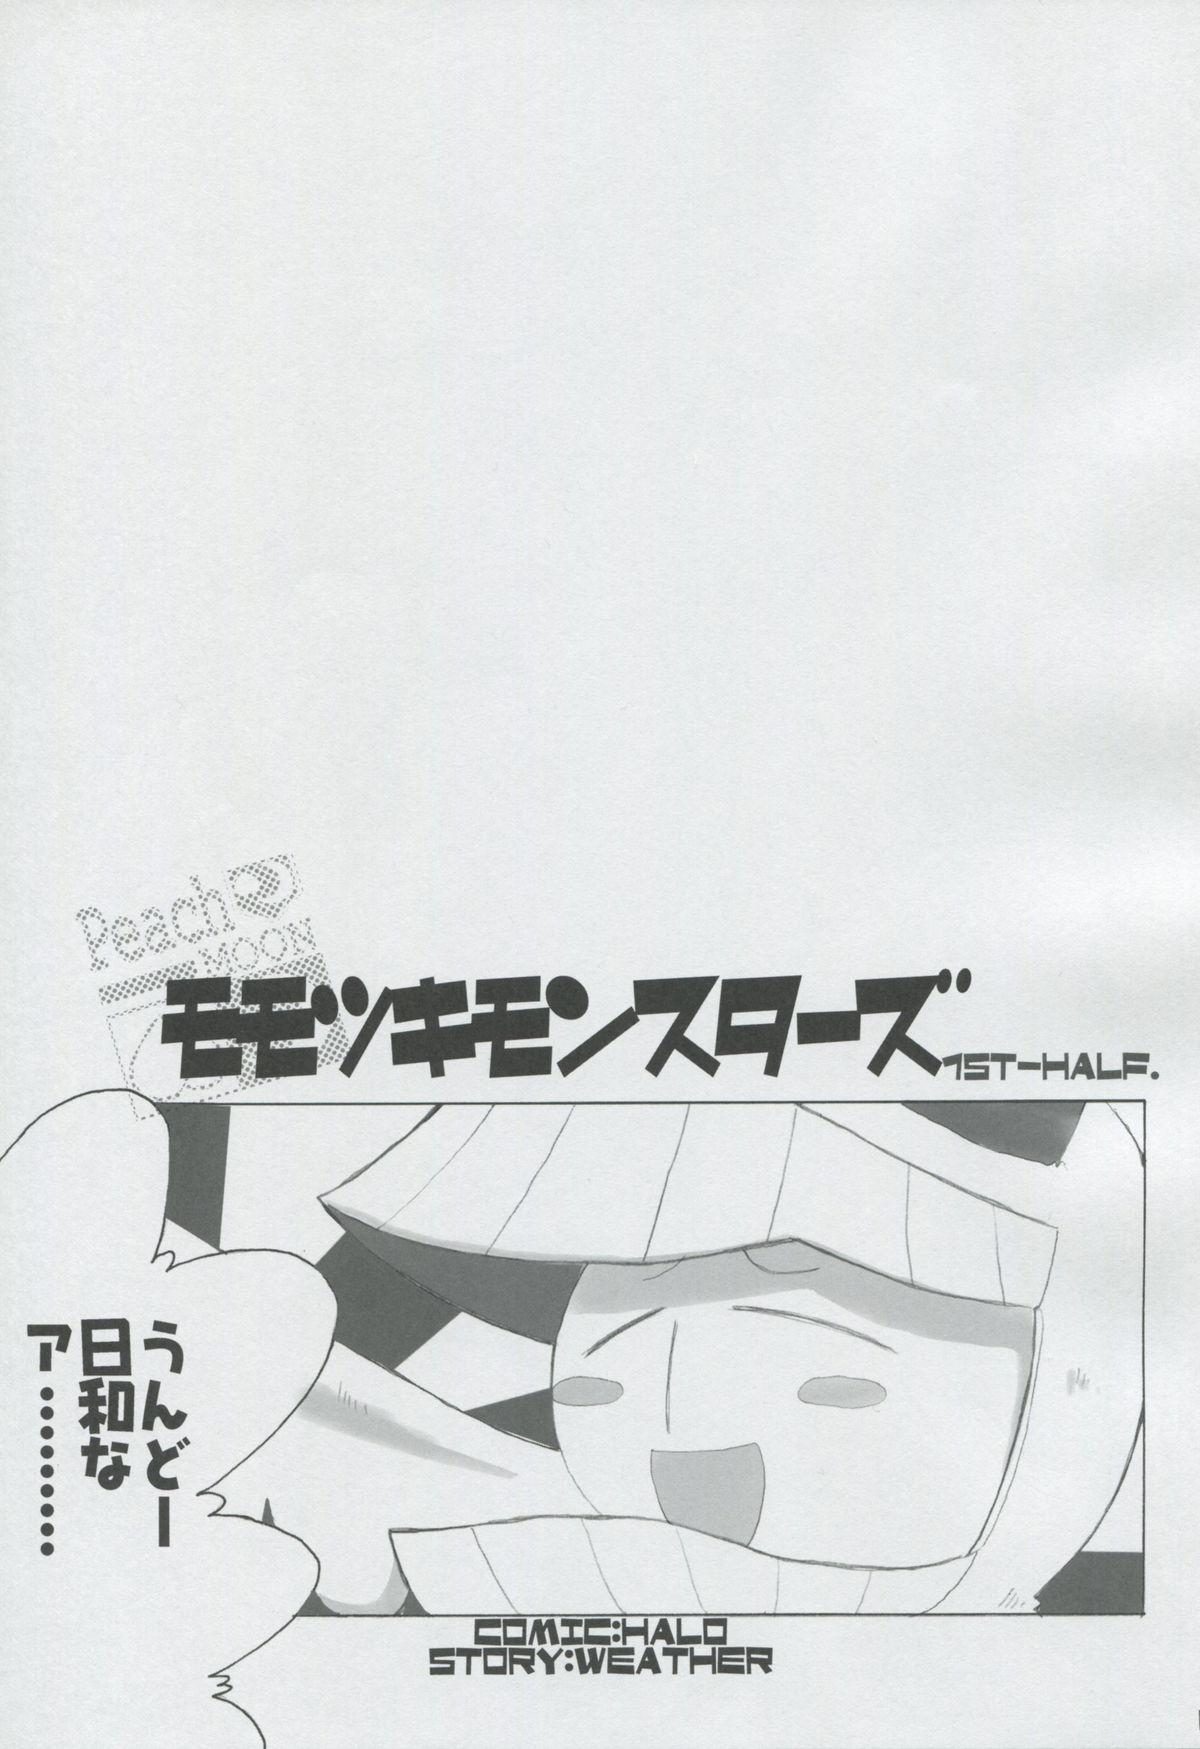 Buttfucking Momo Tsuki Monsters 1st-half - Pani poni dash Gayfuck - Page 2